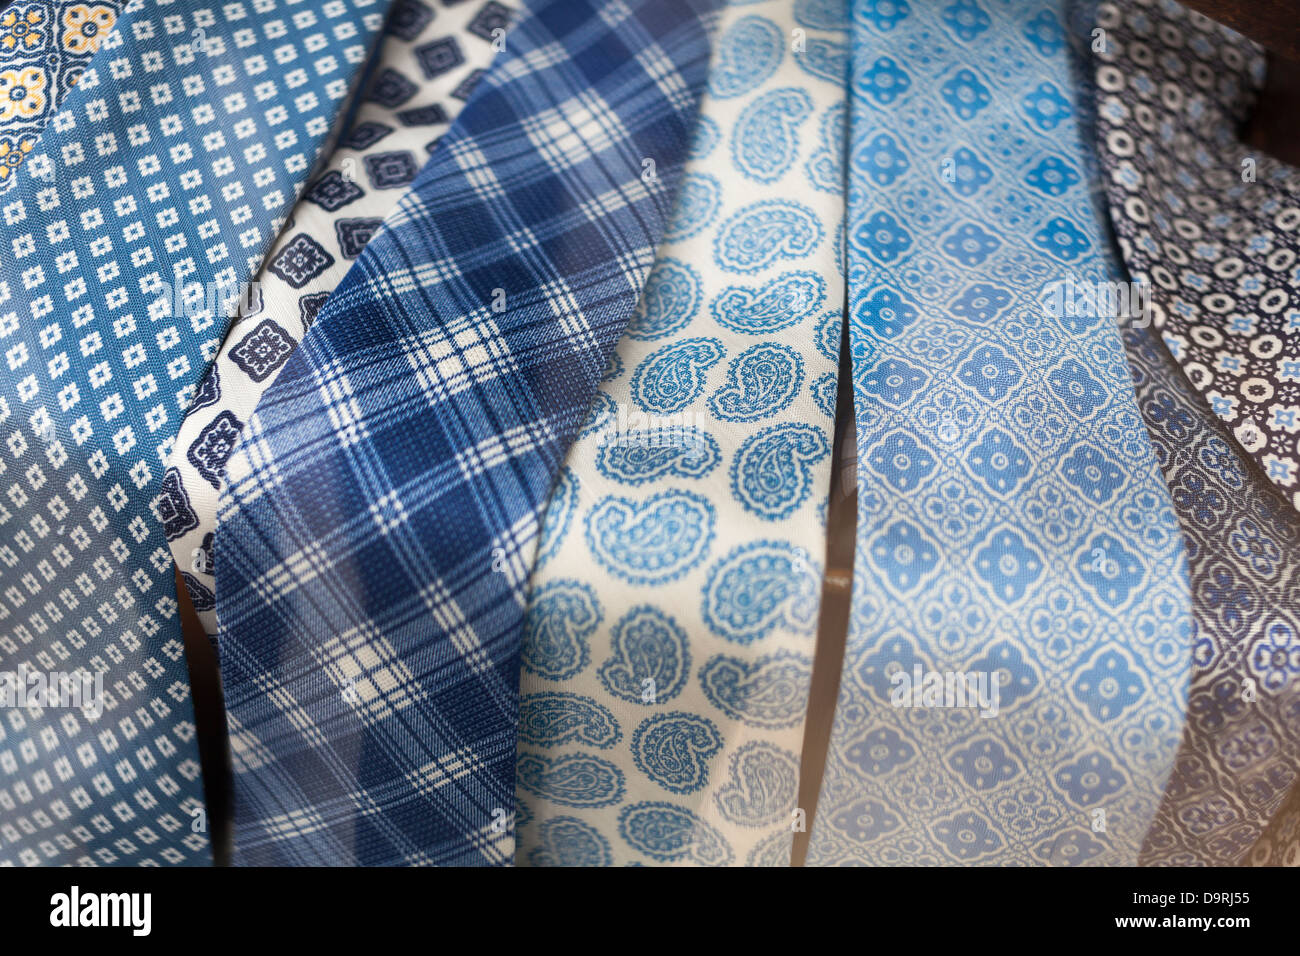 Silk ties on display Stock Photo